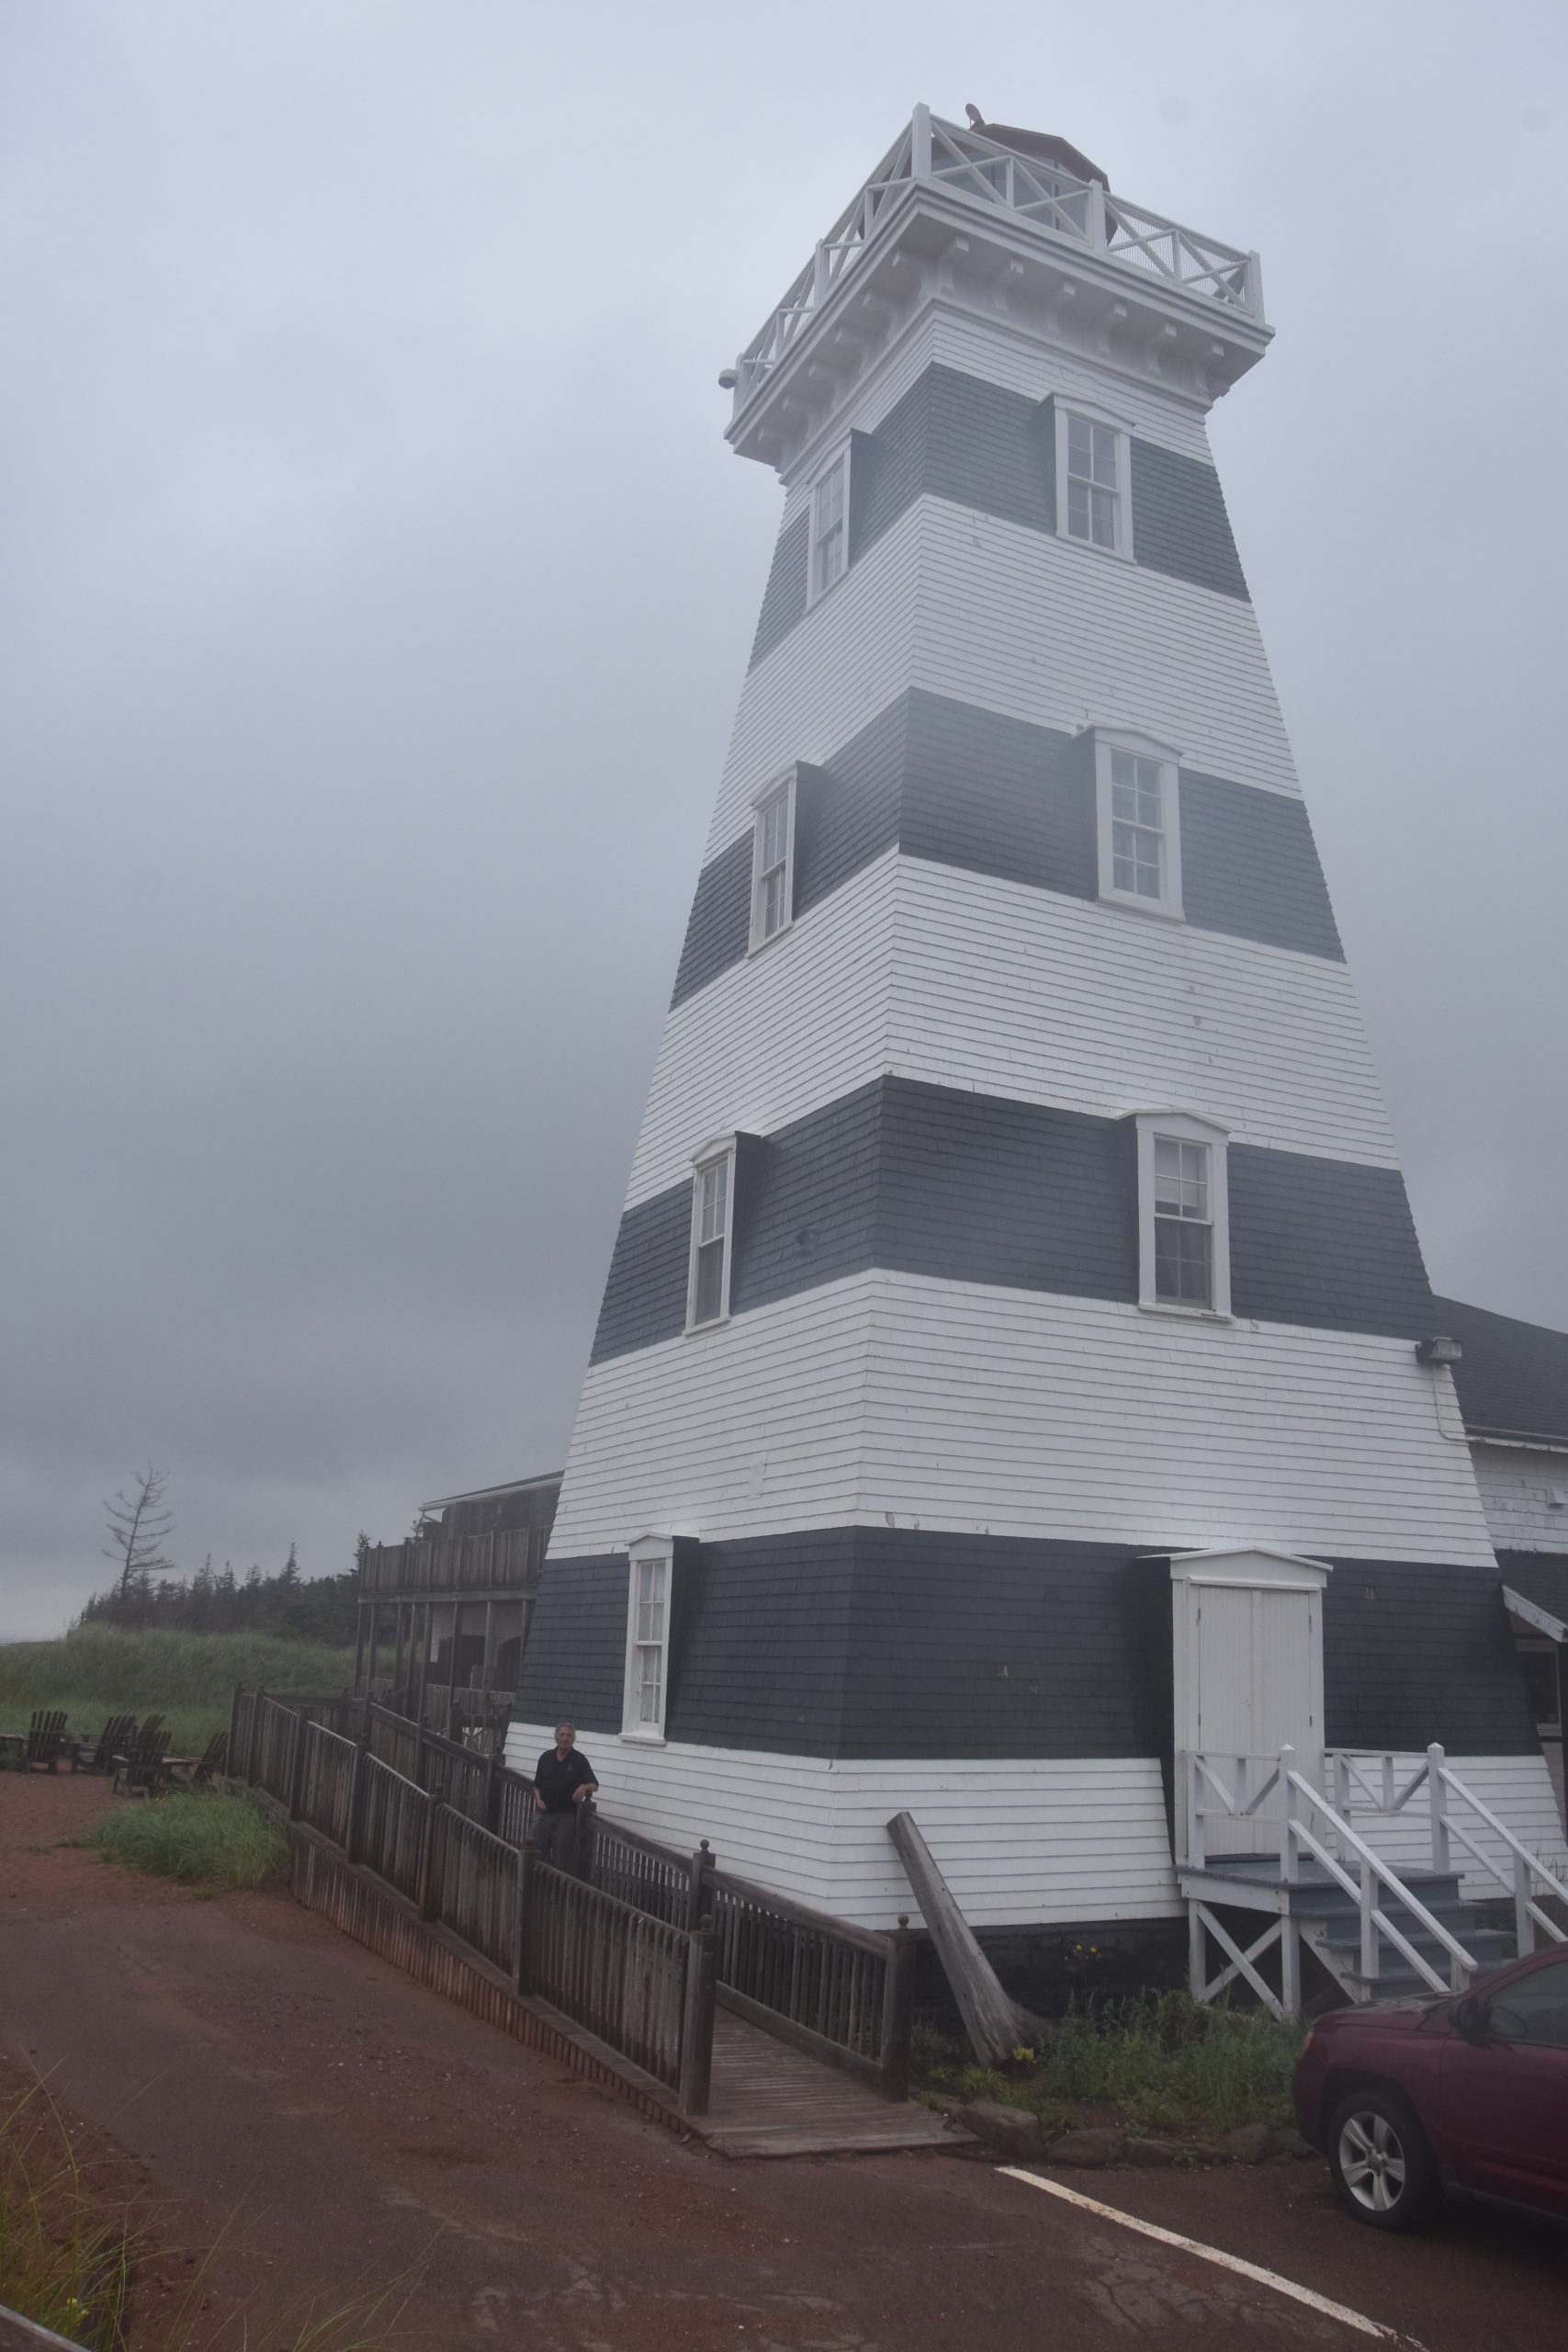 West Point Lighthouse, North Cape Coastal Drive